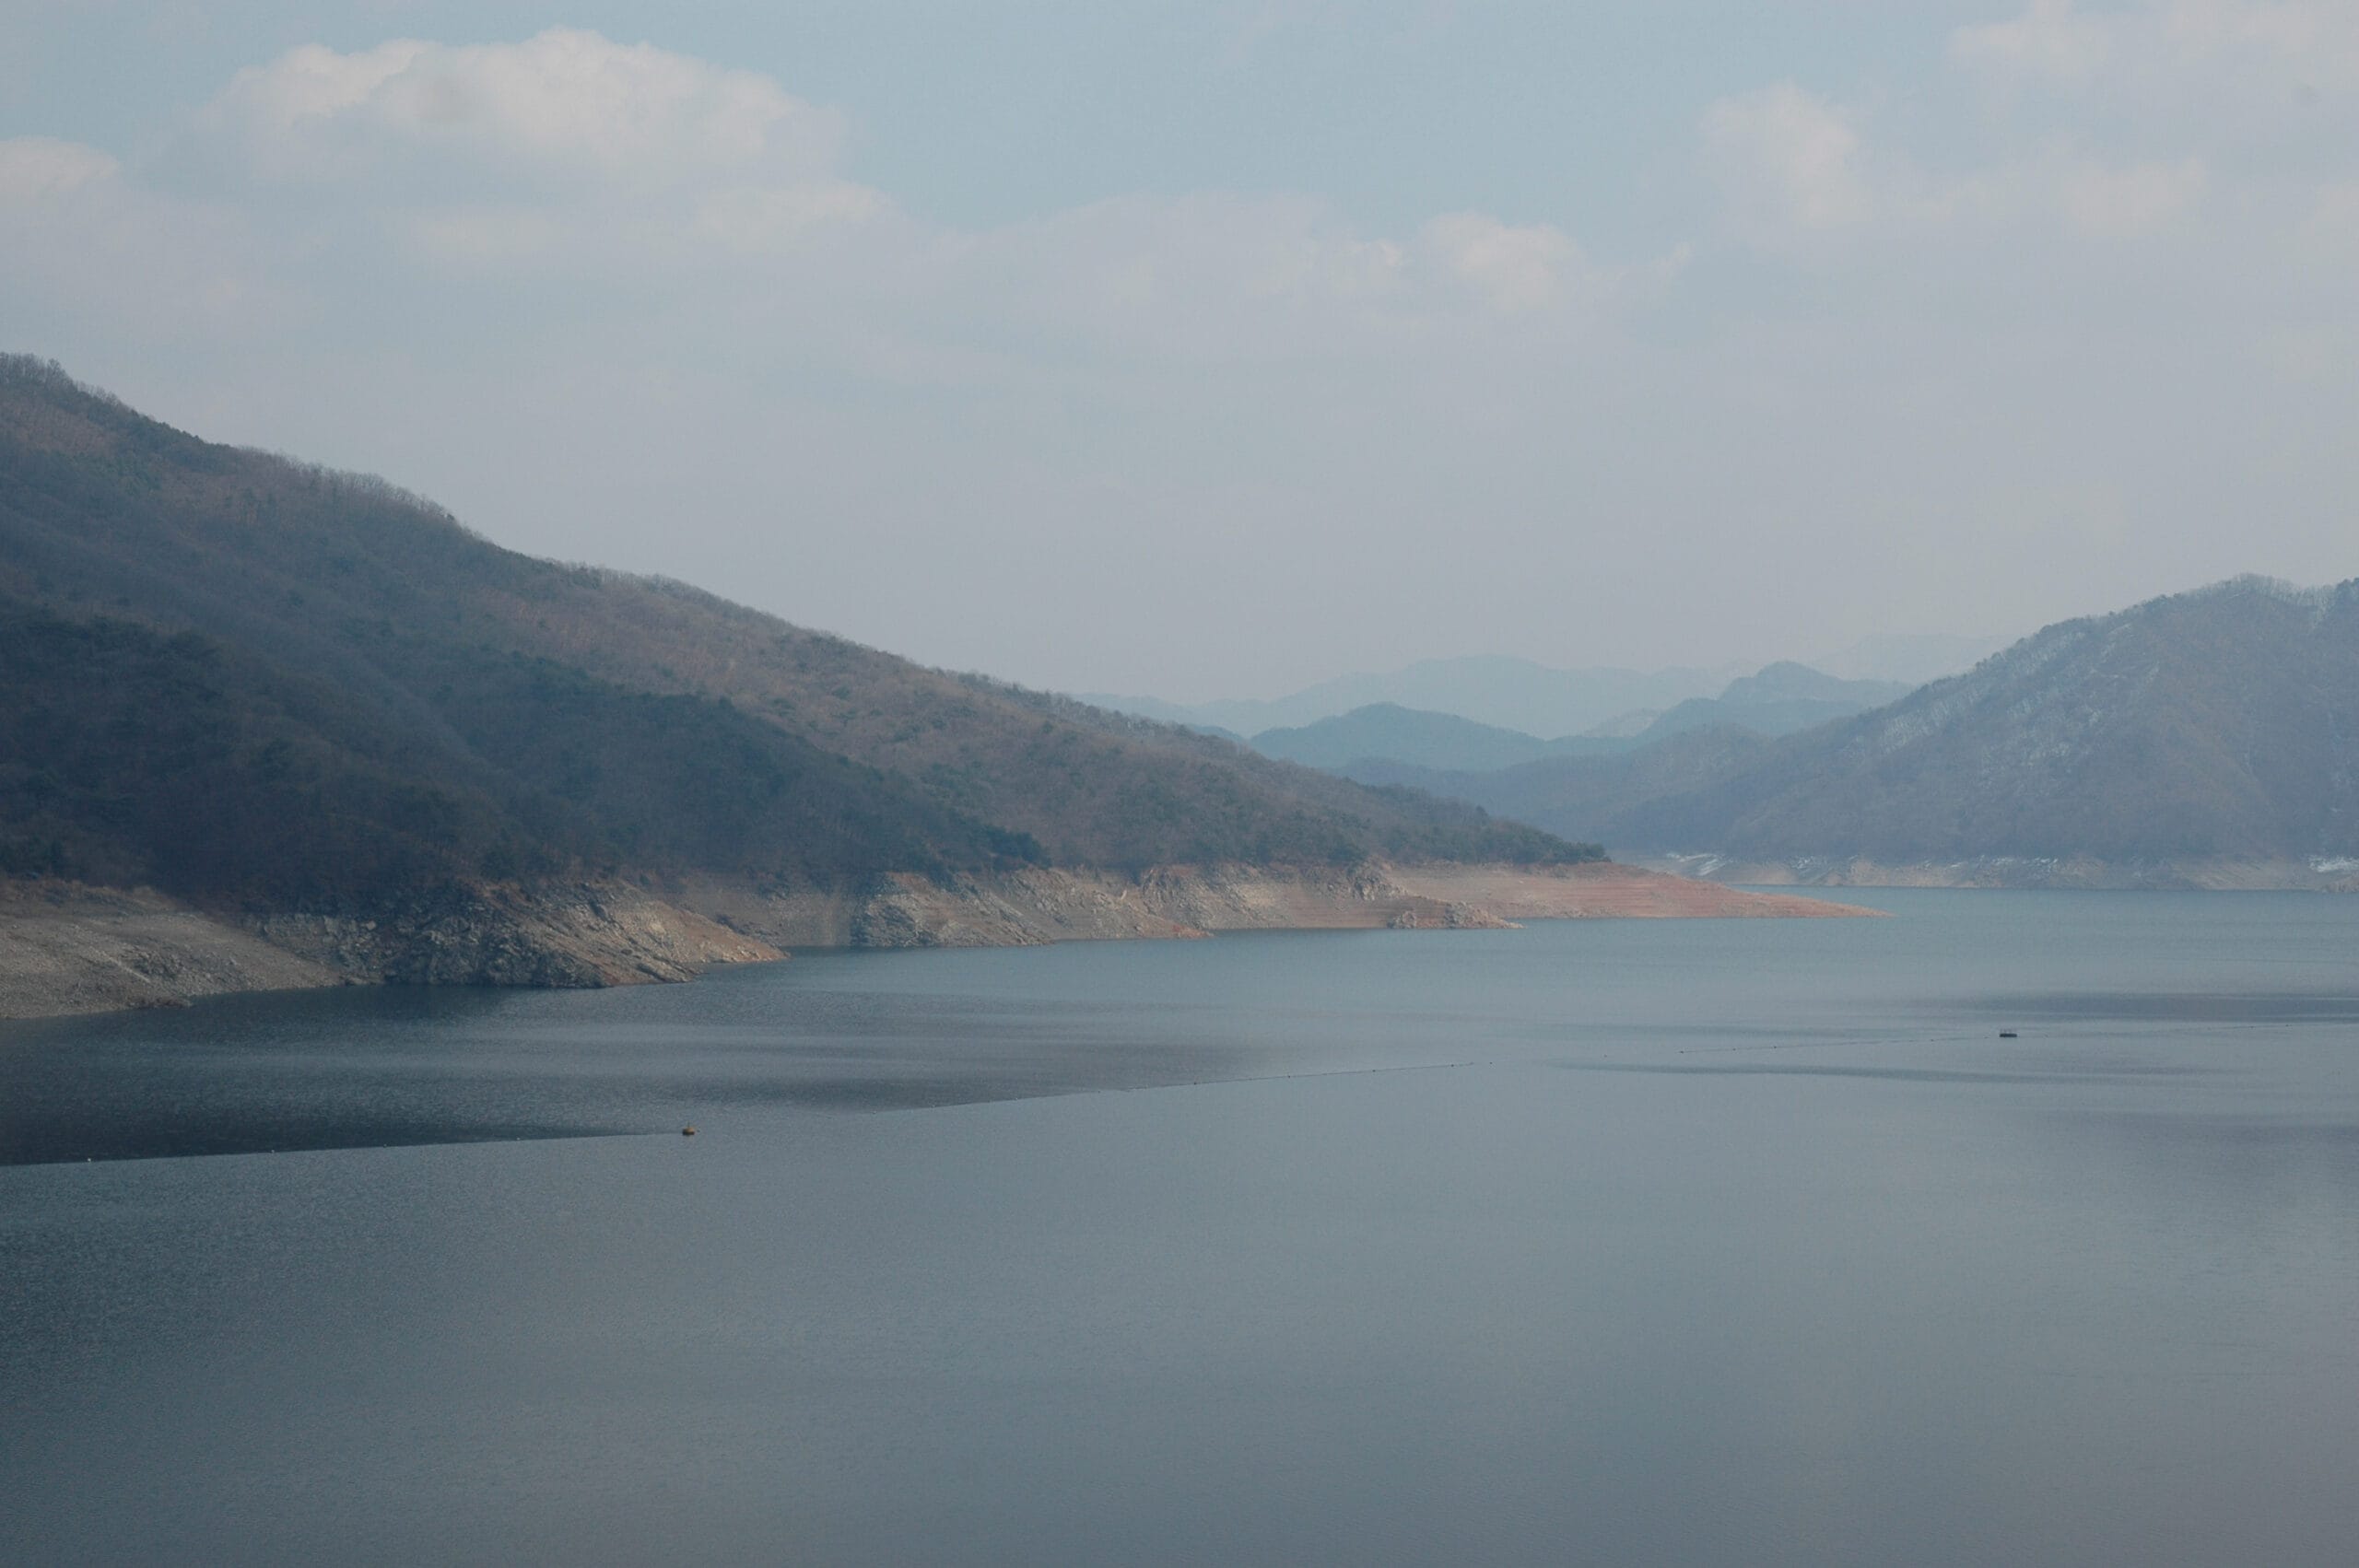 Chuncheon & Soyang Dam